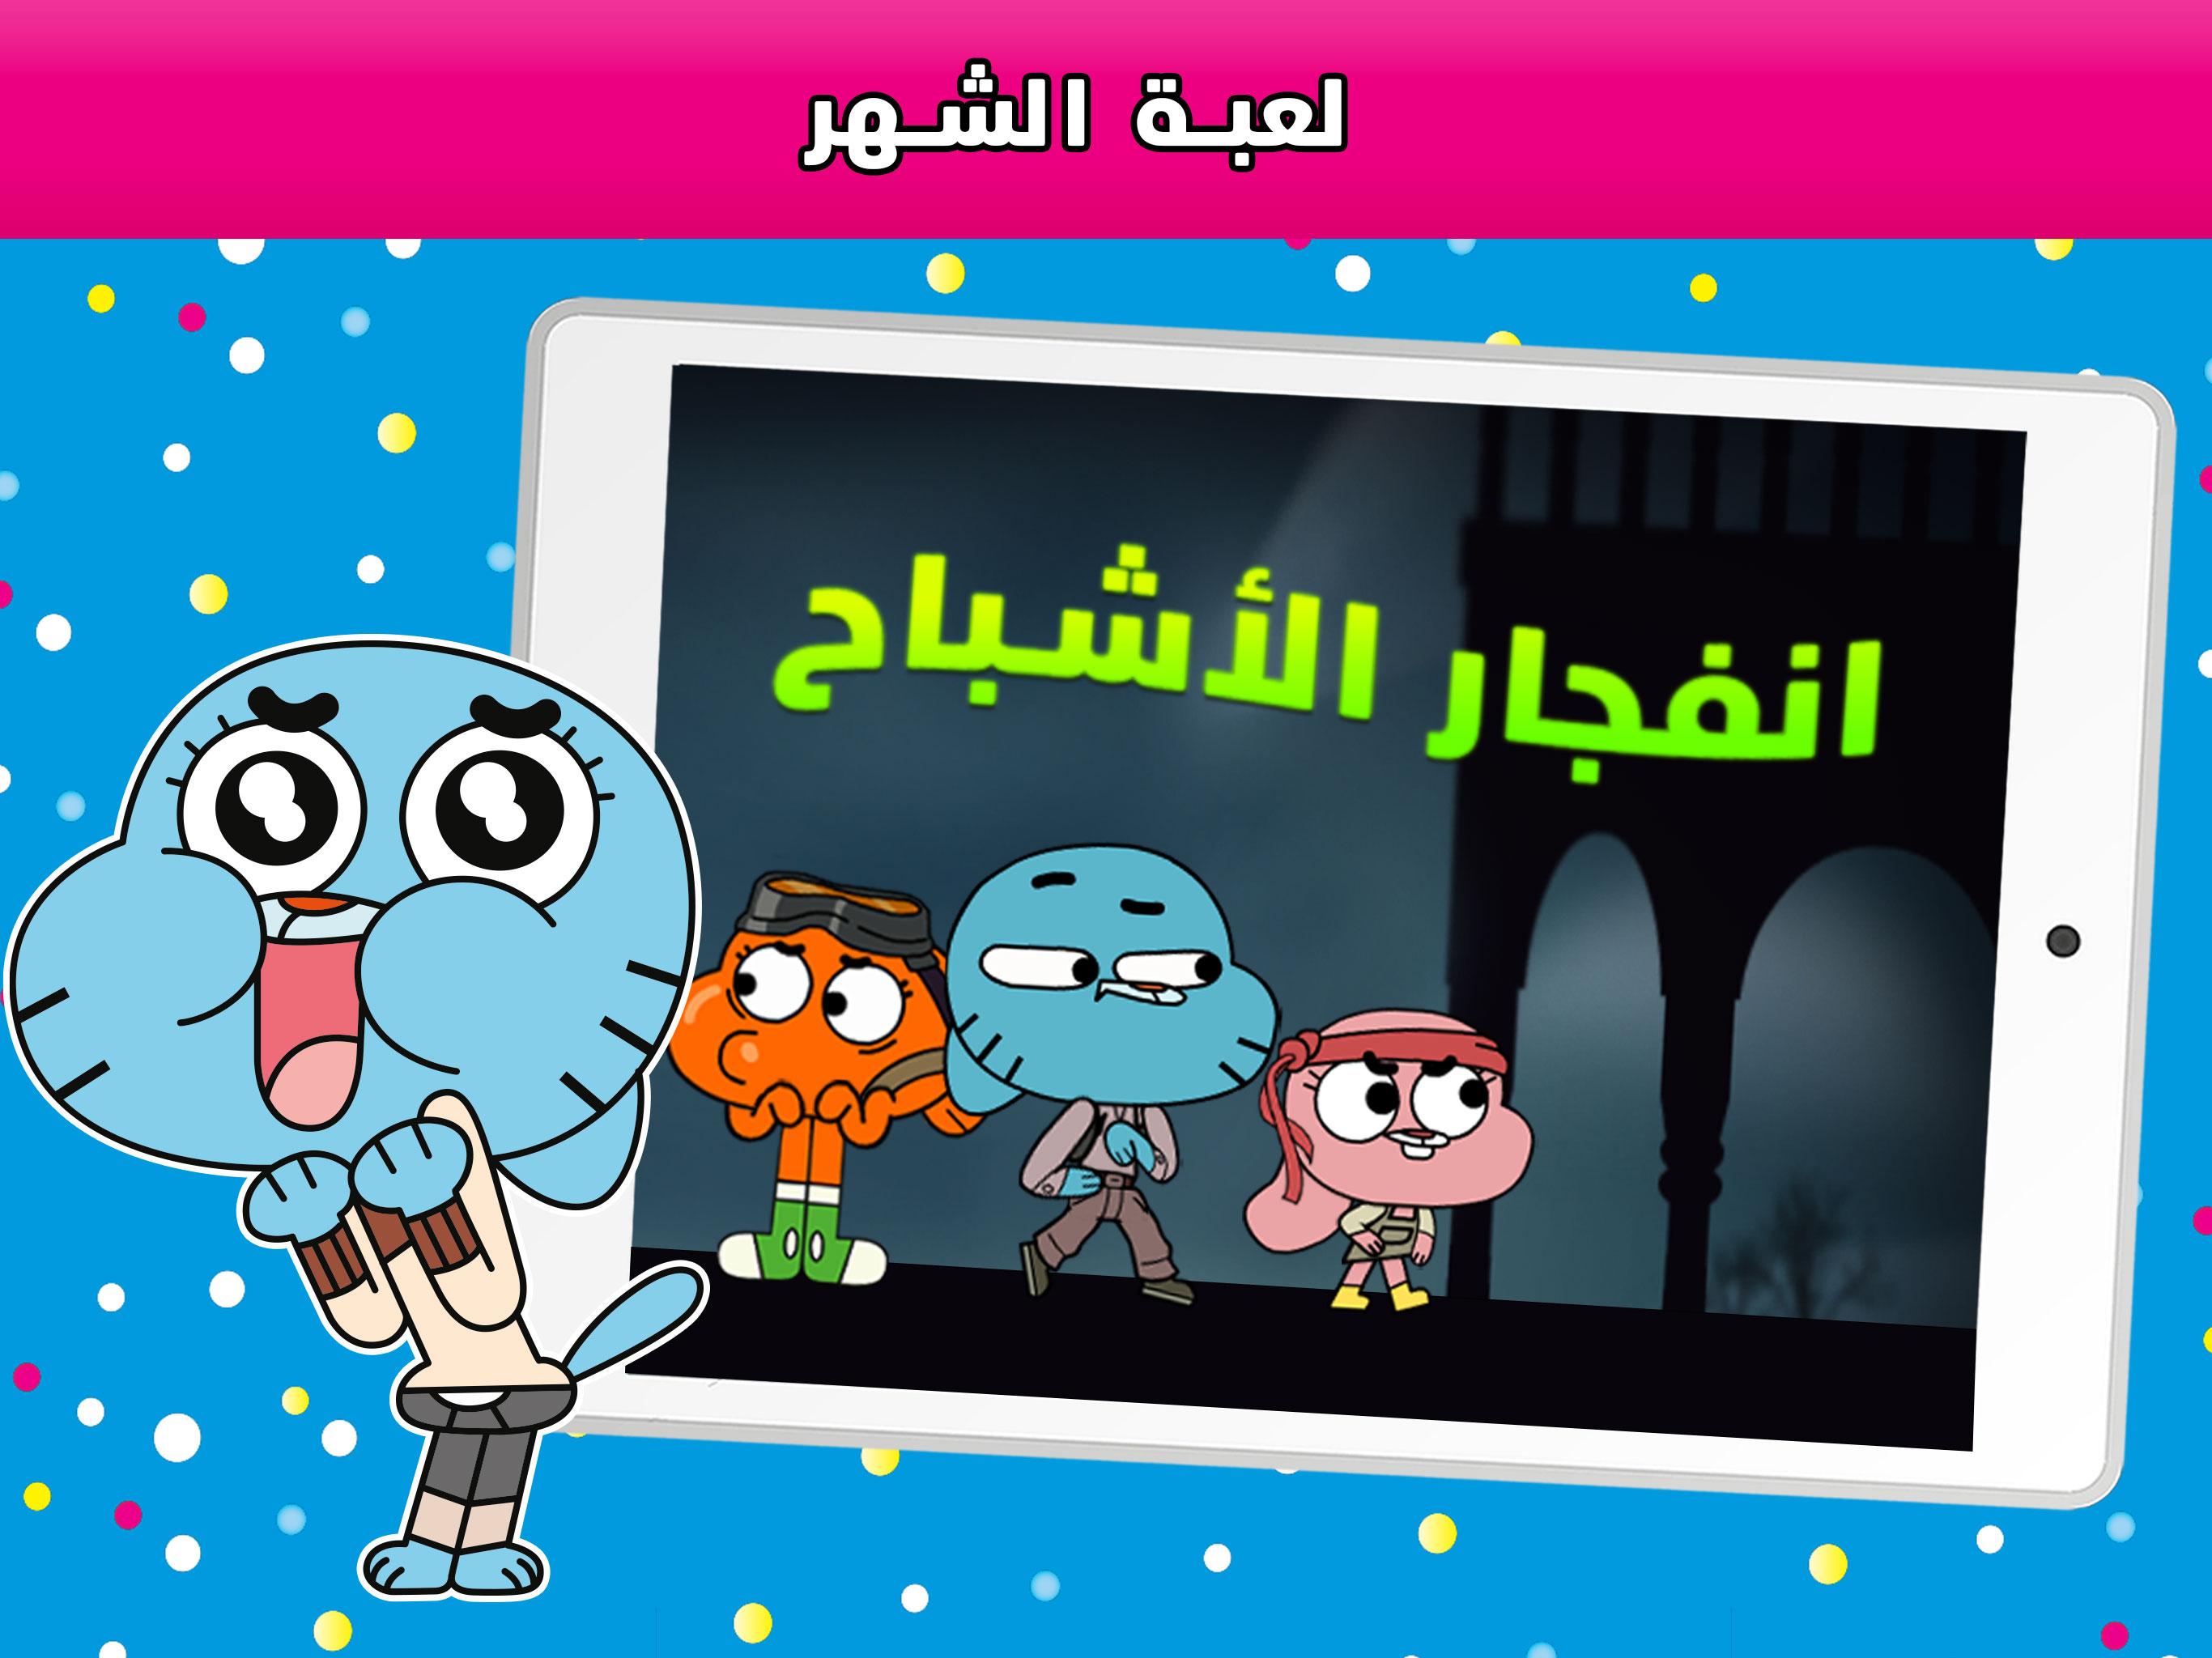 Cartoon Network GameBox - ألعاب مجانية كل شهر for Android - APK Download